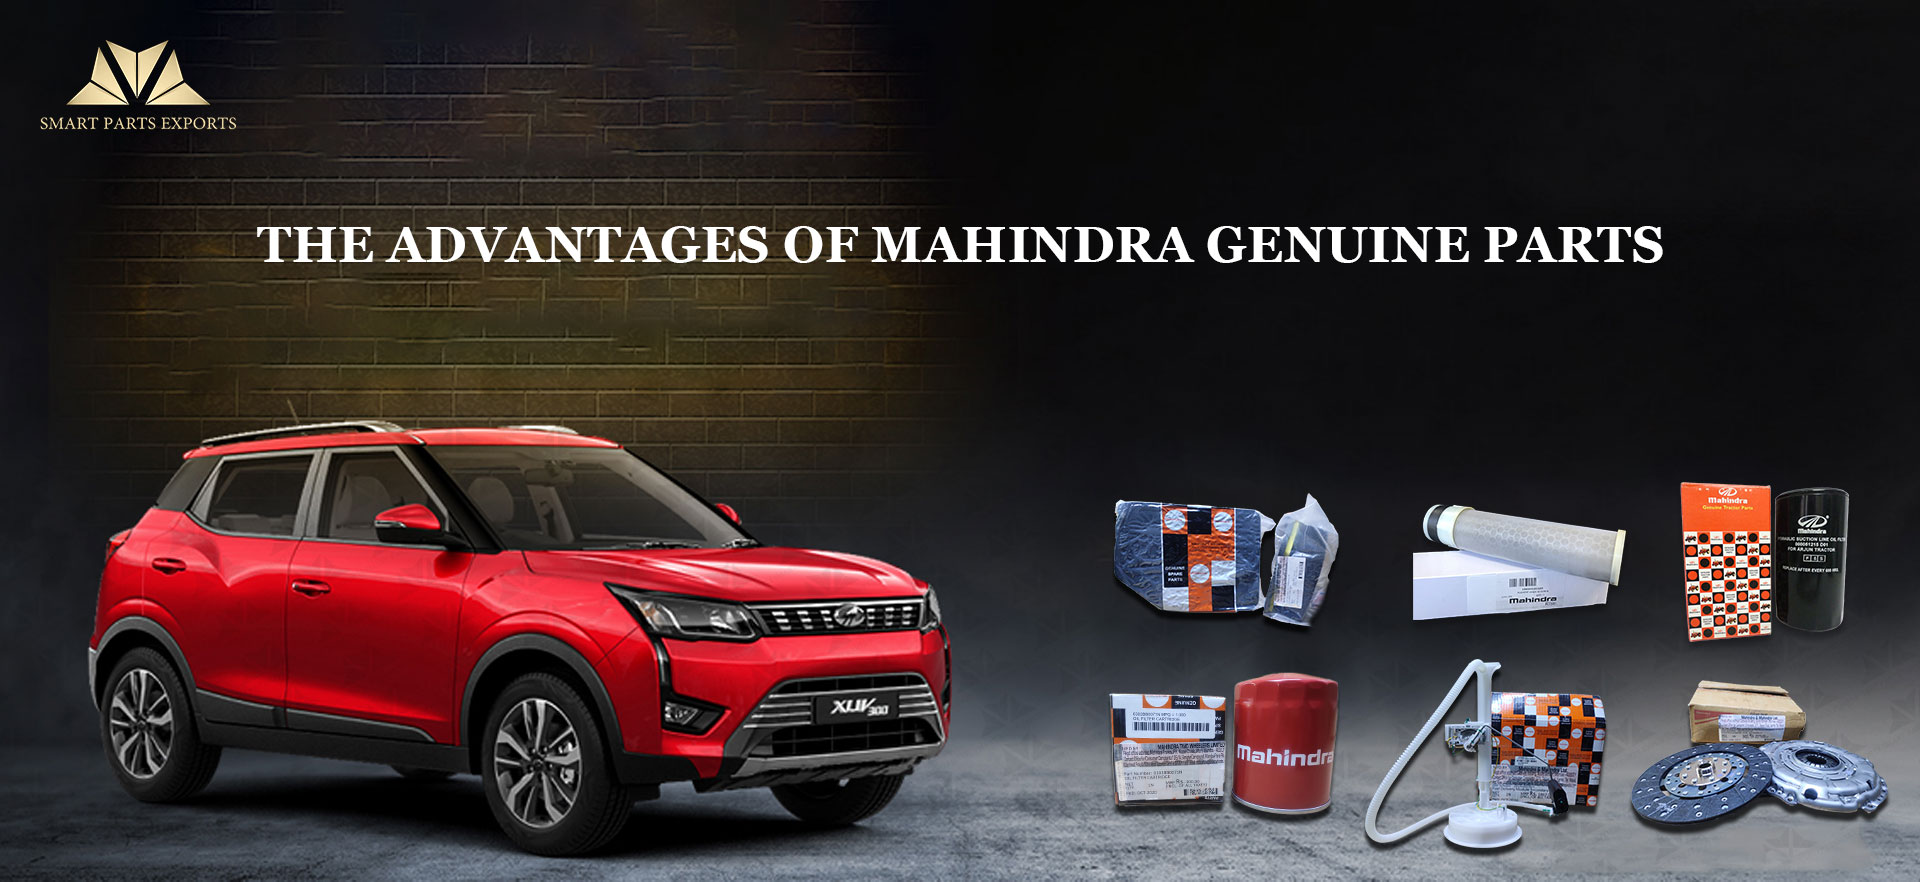 The Advantages of Mahindra Genuine Parts